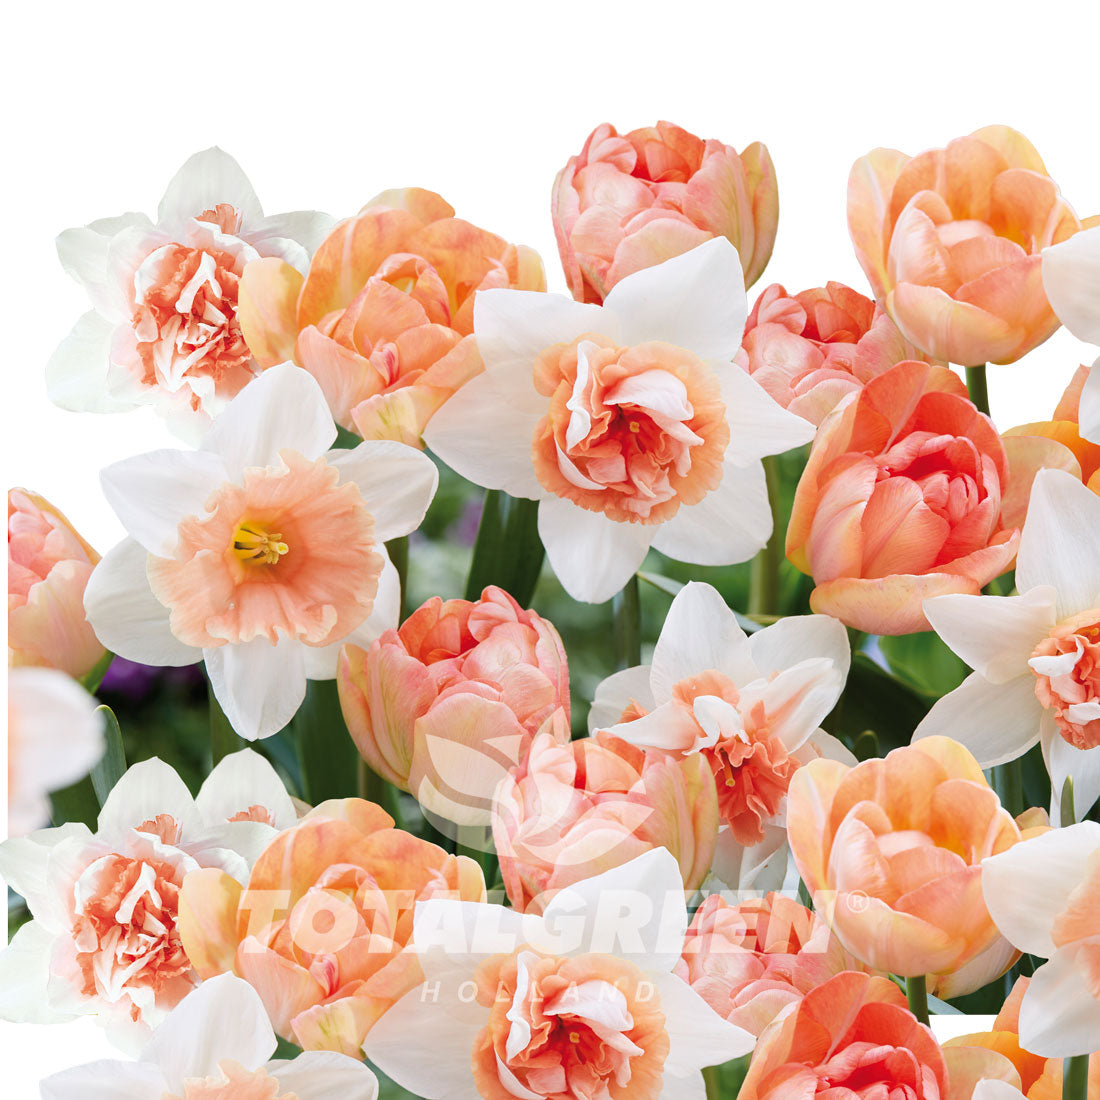 TOTALGREEN Bulbes de tulipe Total Green Holland(MD), couleurs variées  72736000-5